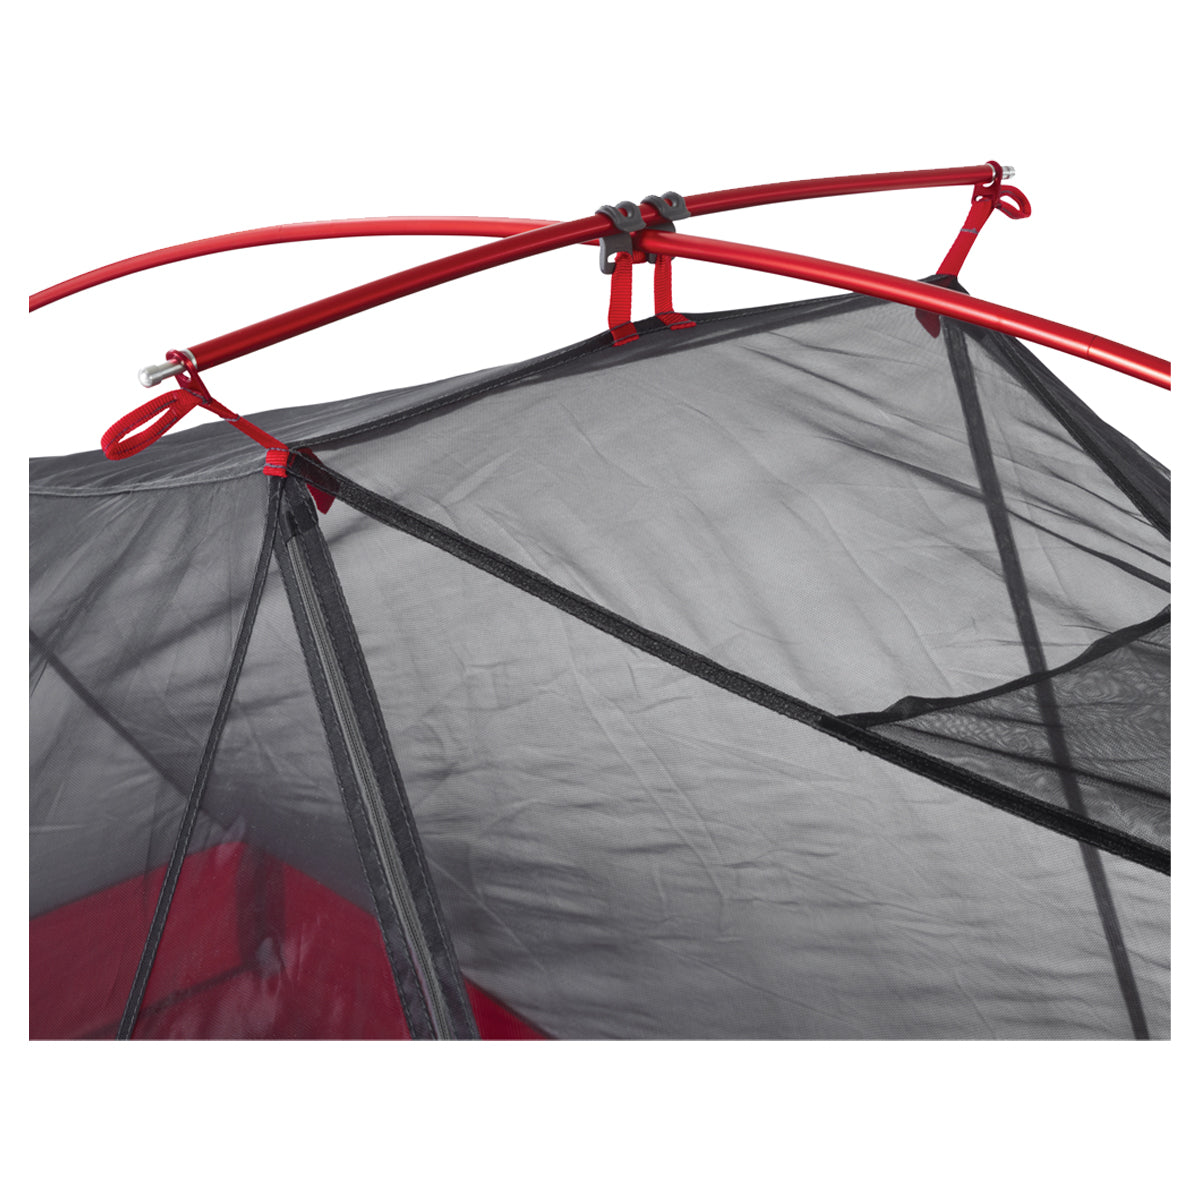 MSR FreeLite 2 Person Tent in  by GOHUNT | MSR - GOHUNT Shop